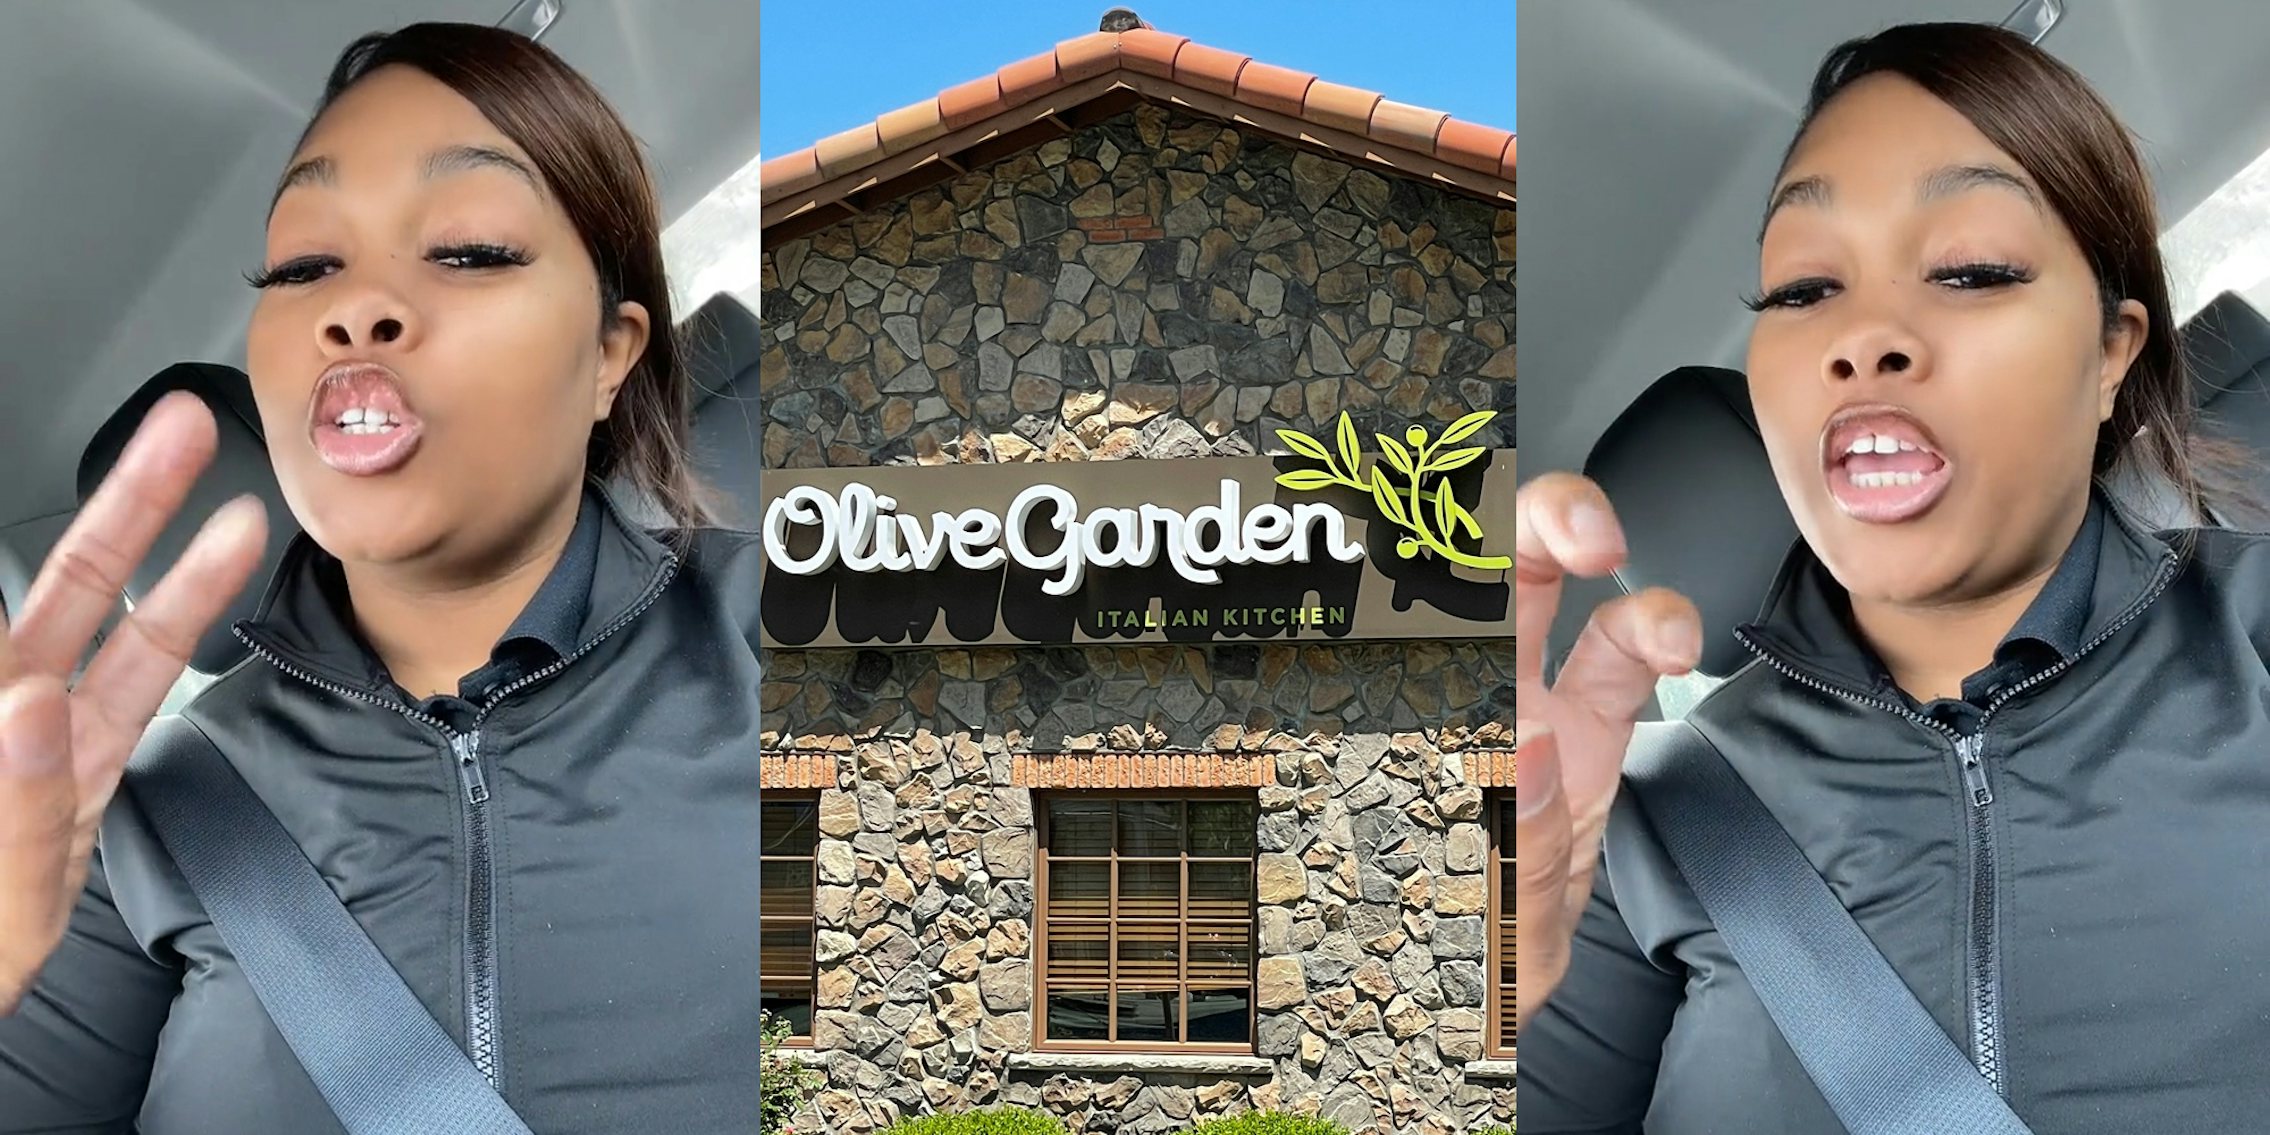 Olive Garden manager speaking in car (l) Olive Garden sign on building (c) Olive Garden manager speaking in car (r)